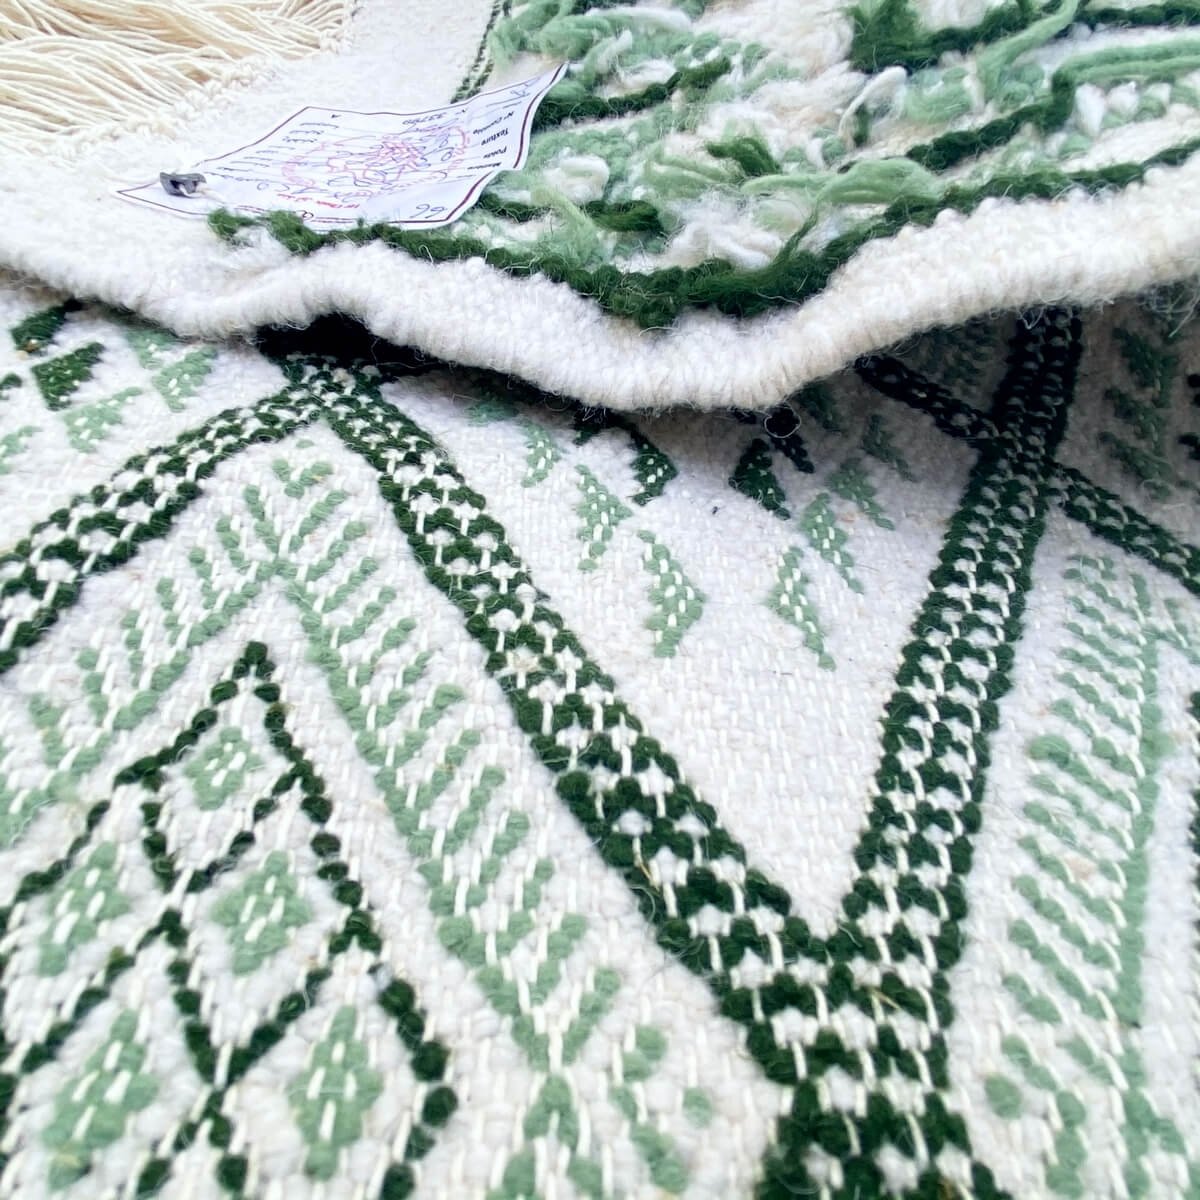 Berber carpet Rug Margoum Taksilit 160x250 Green/White (Handmade, Wool, Tunisia) Tunisian margoum rug from the city of Kairouan.